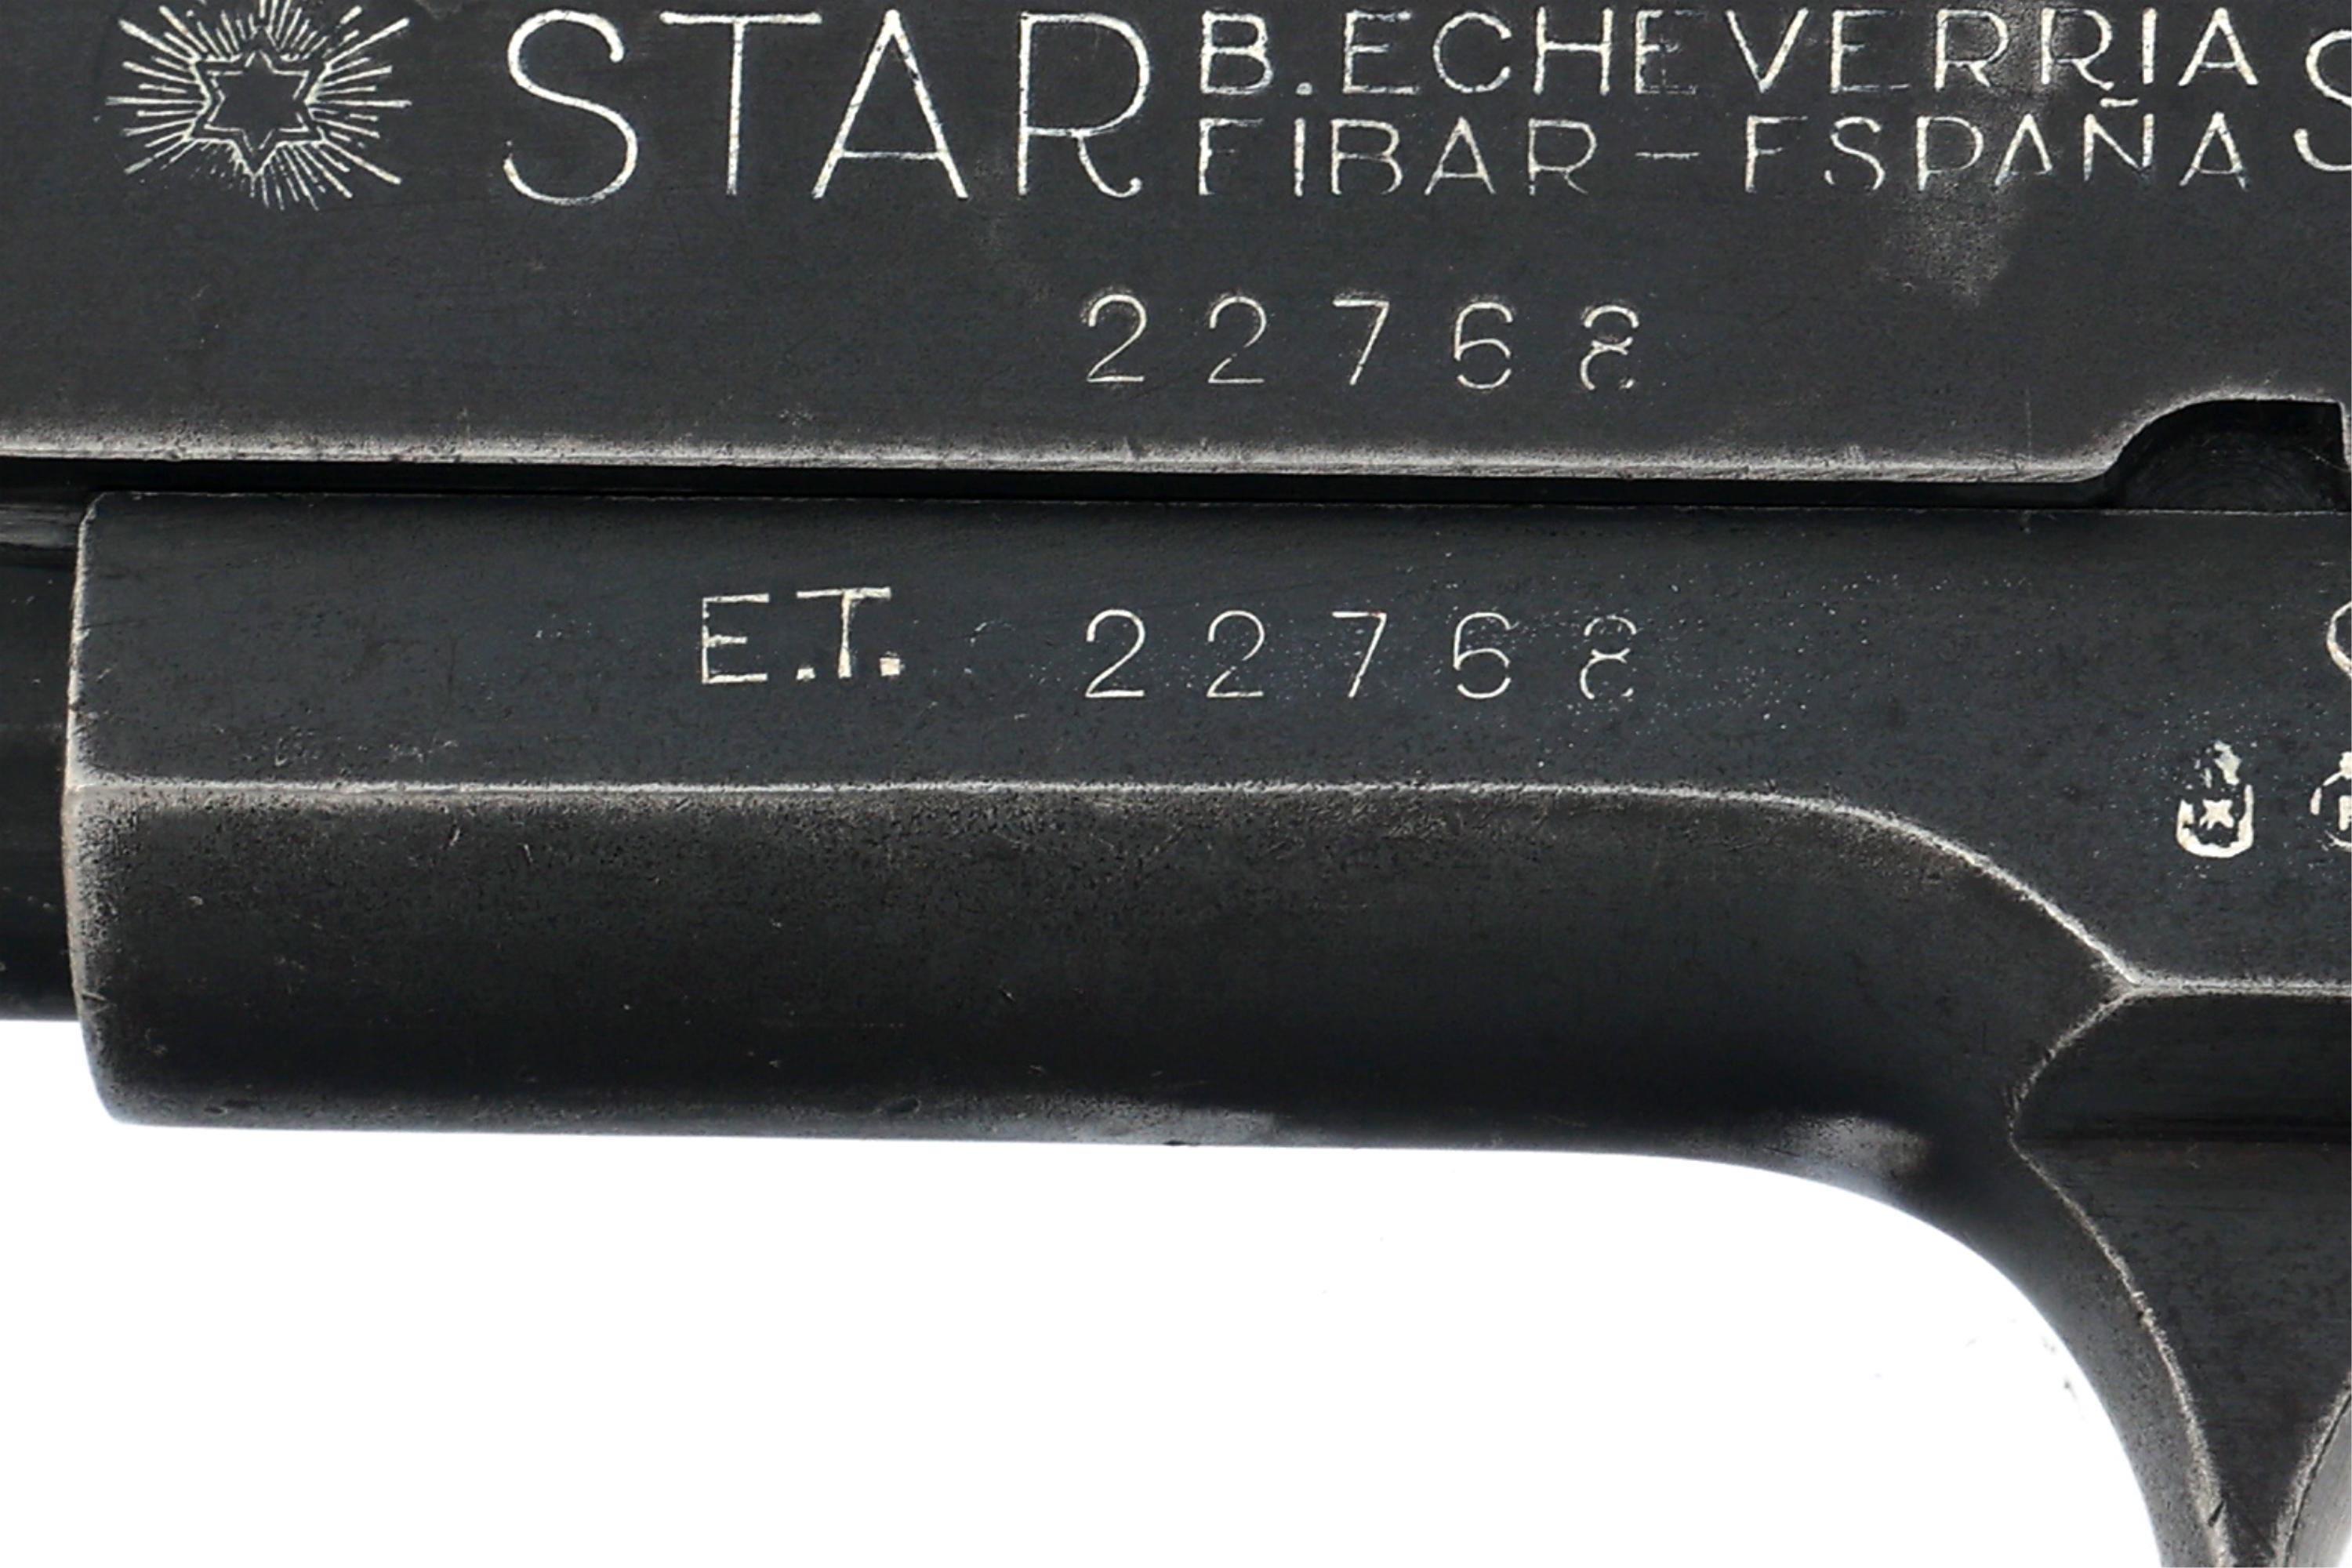 STAR MODEL SUPER A 9mm LARGO CALIBER PISTOL